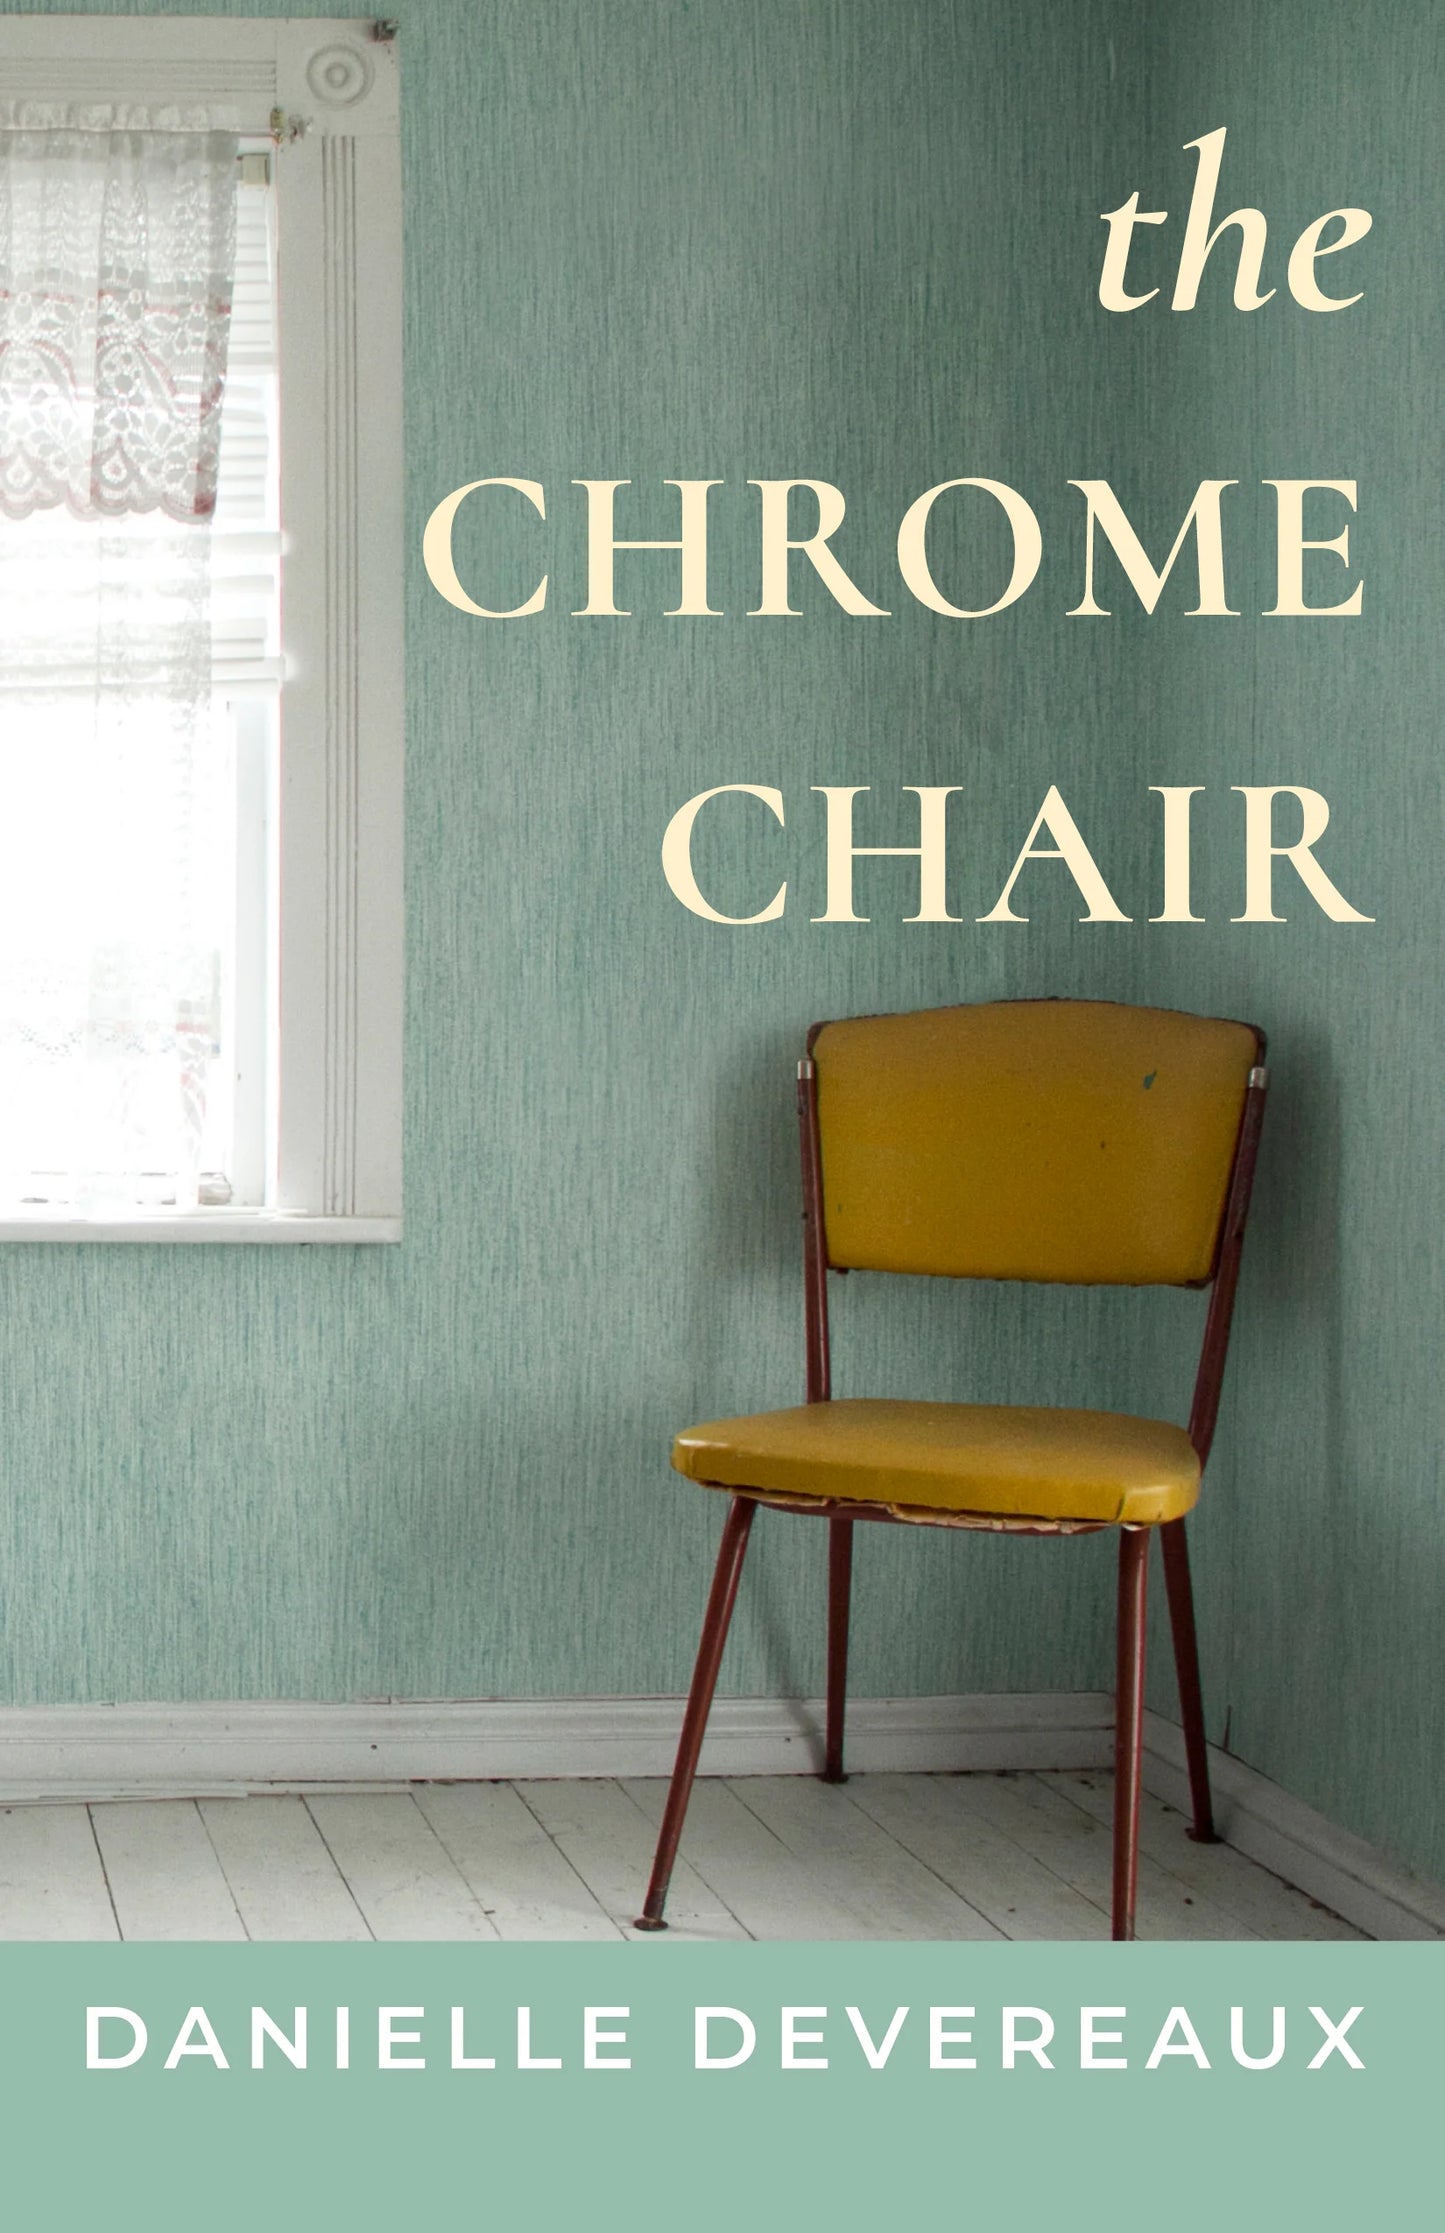 The Chrome Chair: Poems By Danielle Devereaux